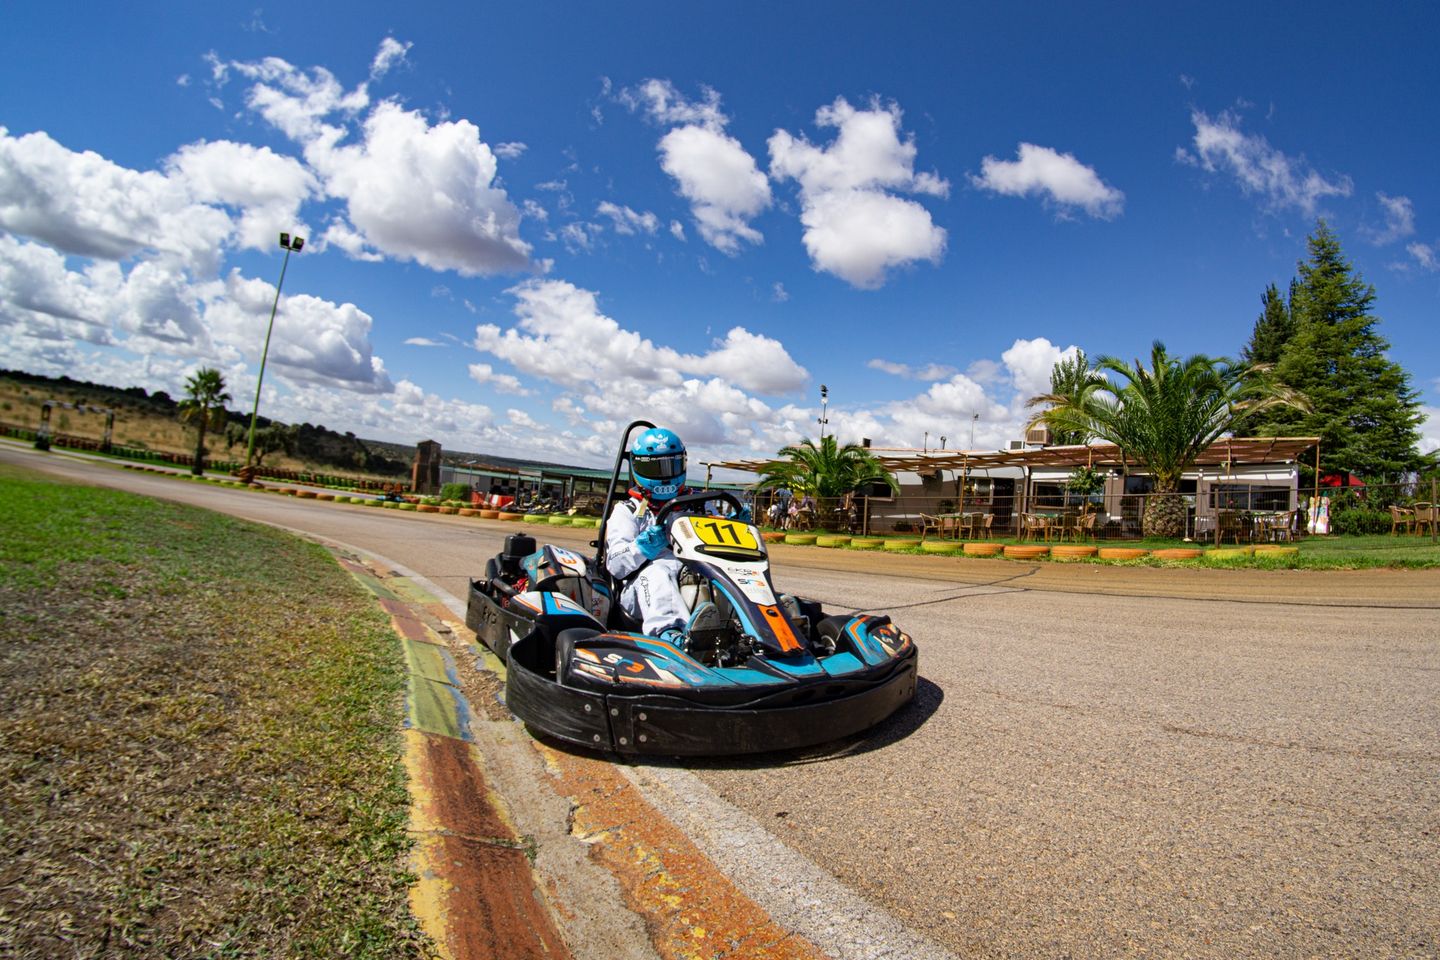 Circuito de kart en Extremadura Cácereskart